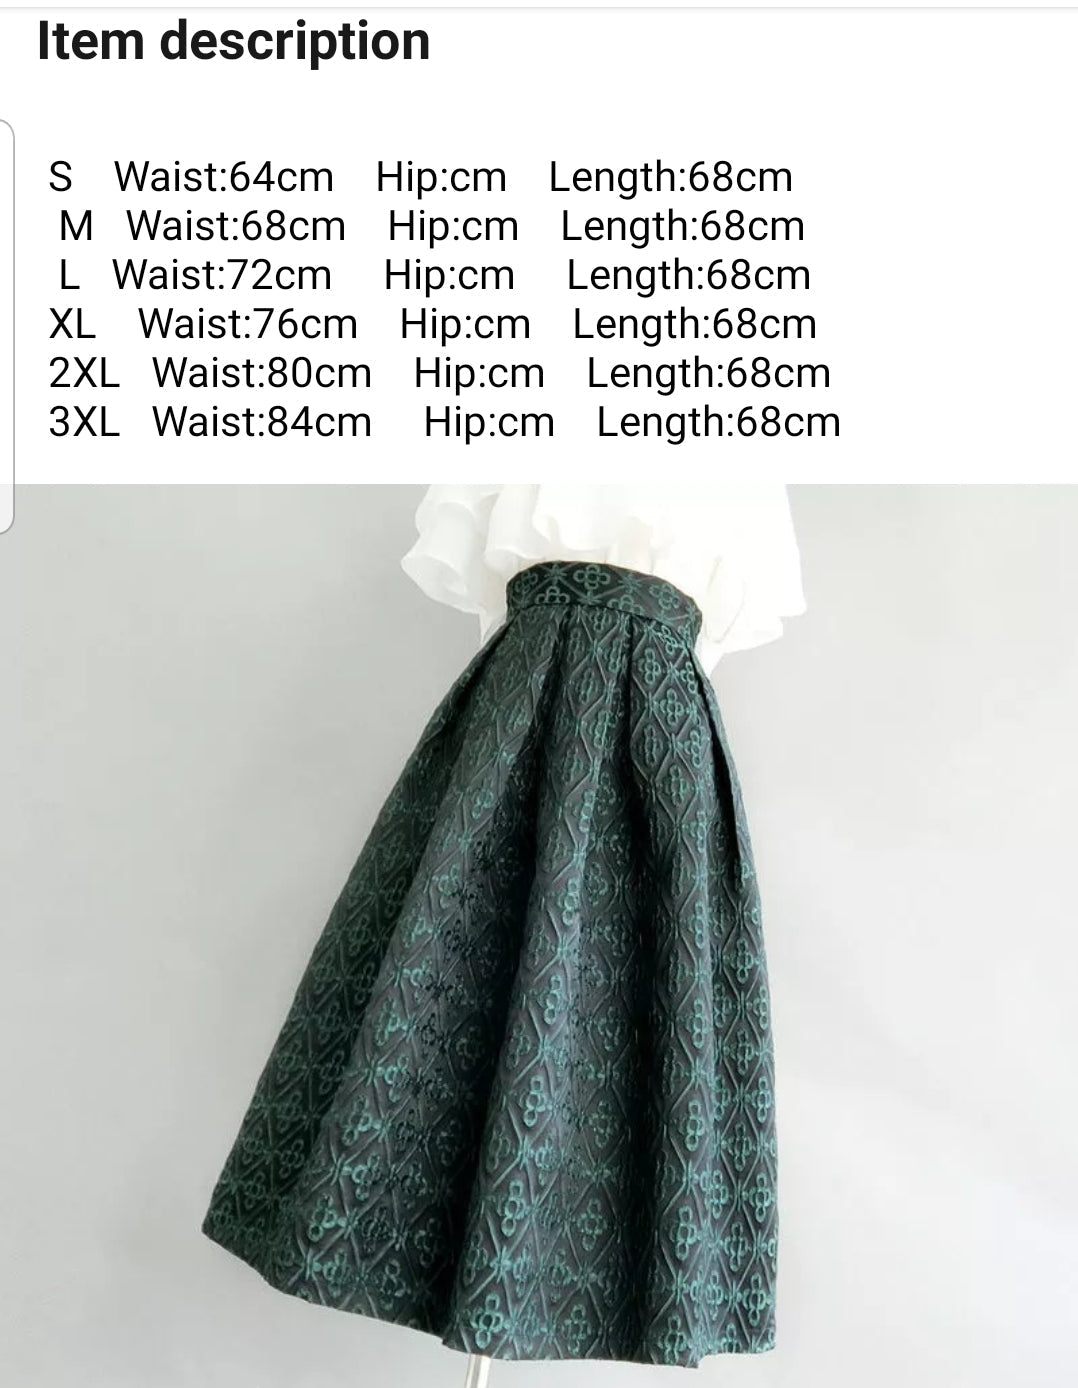 Green Jacquard Mid-Calf Skirt